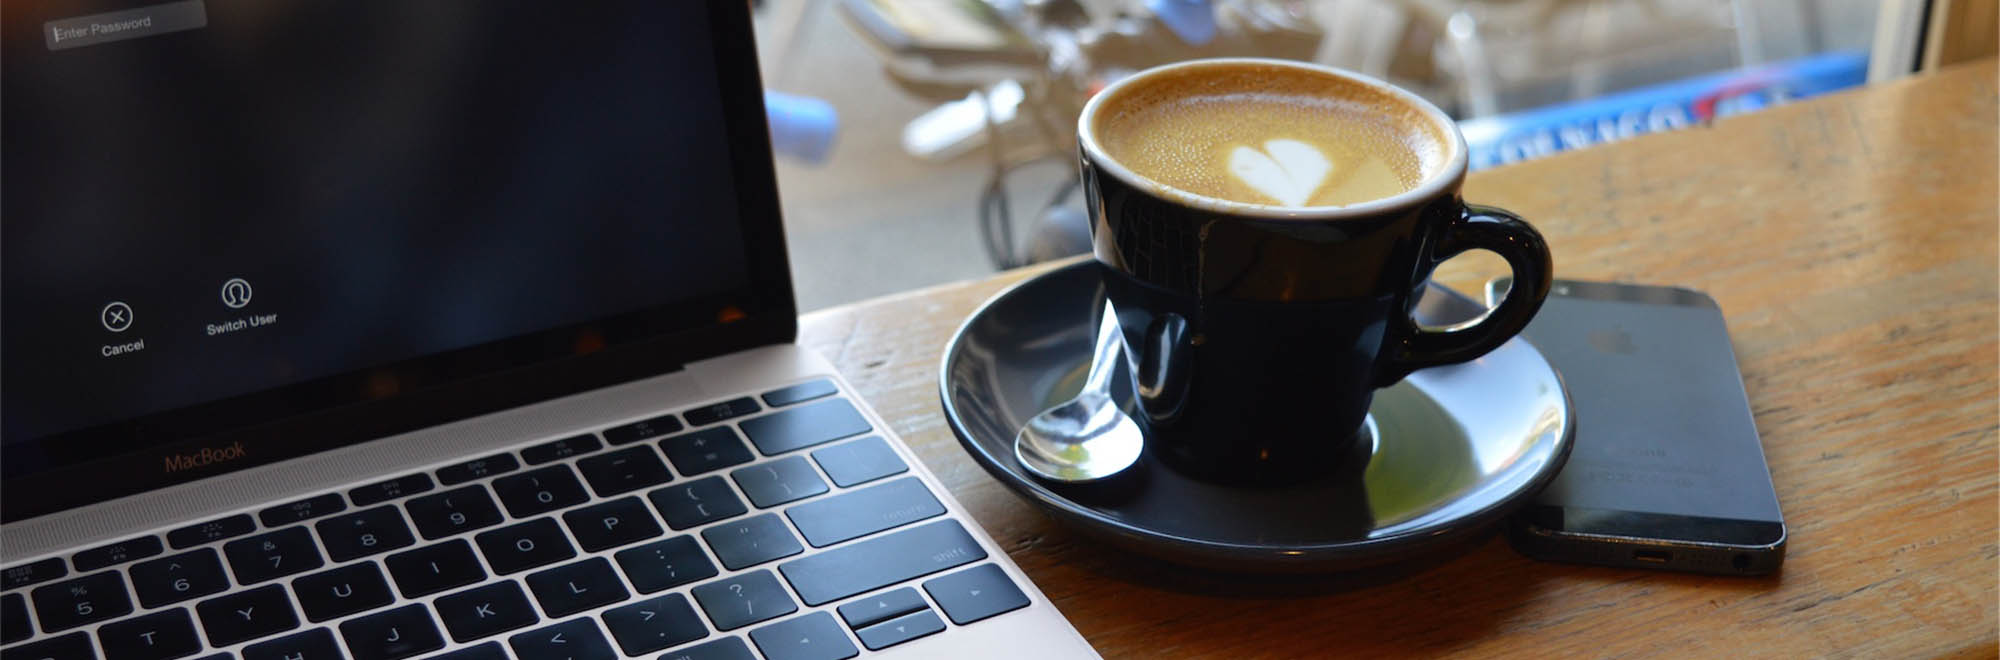 Coffee Mug and MacBook